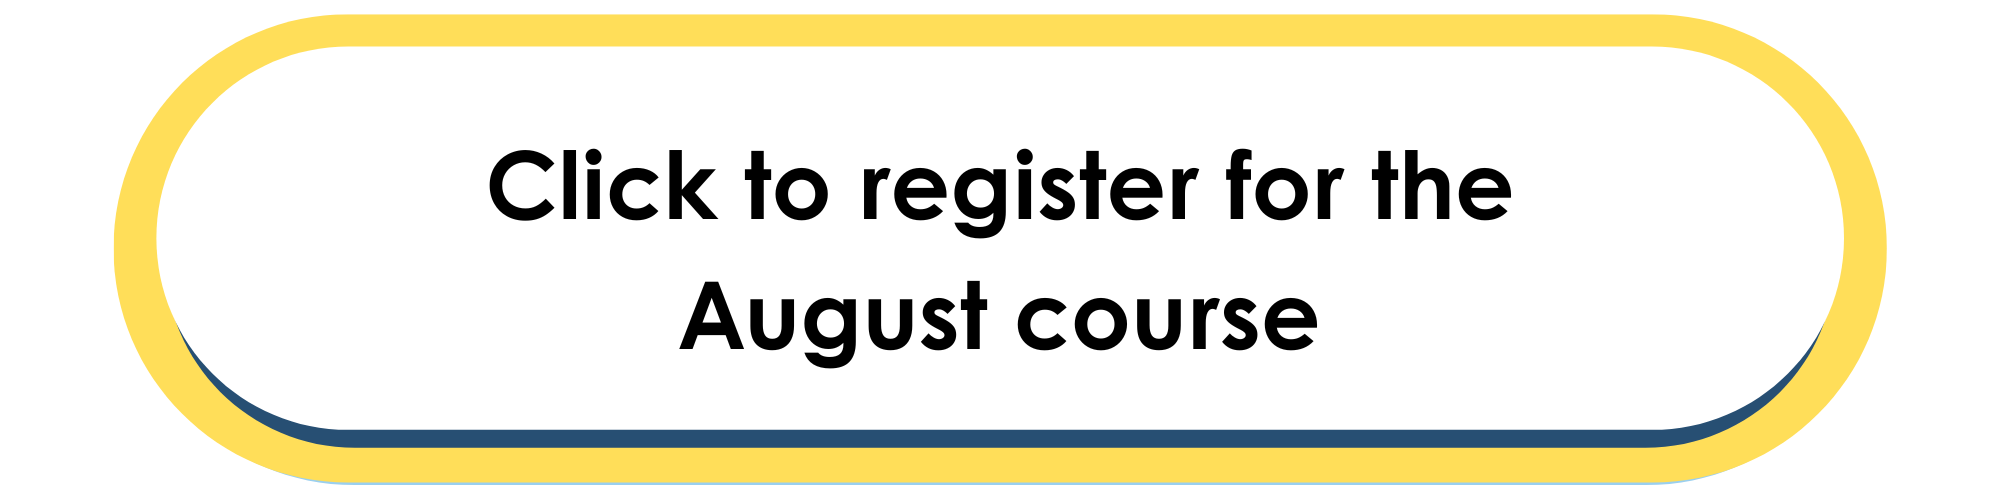 August Course Registration Link